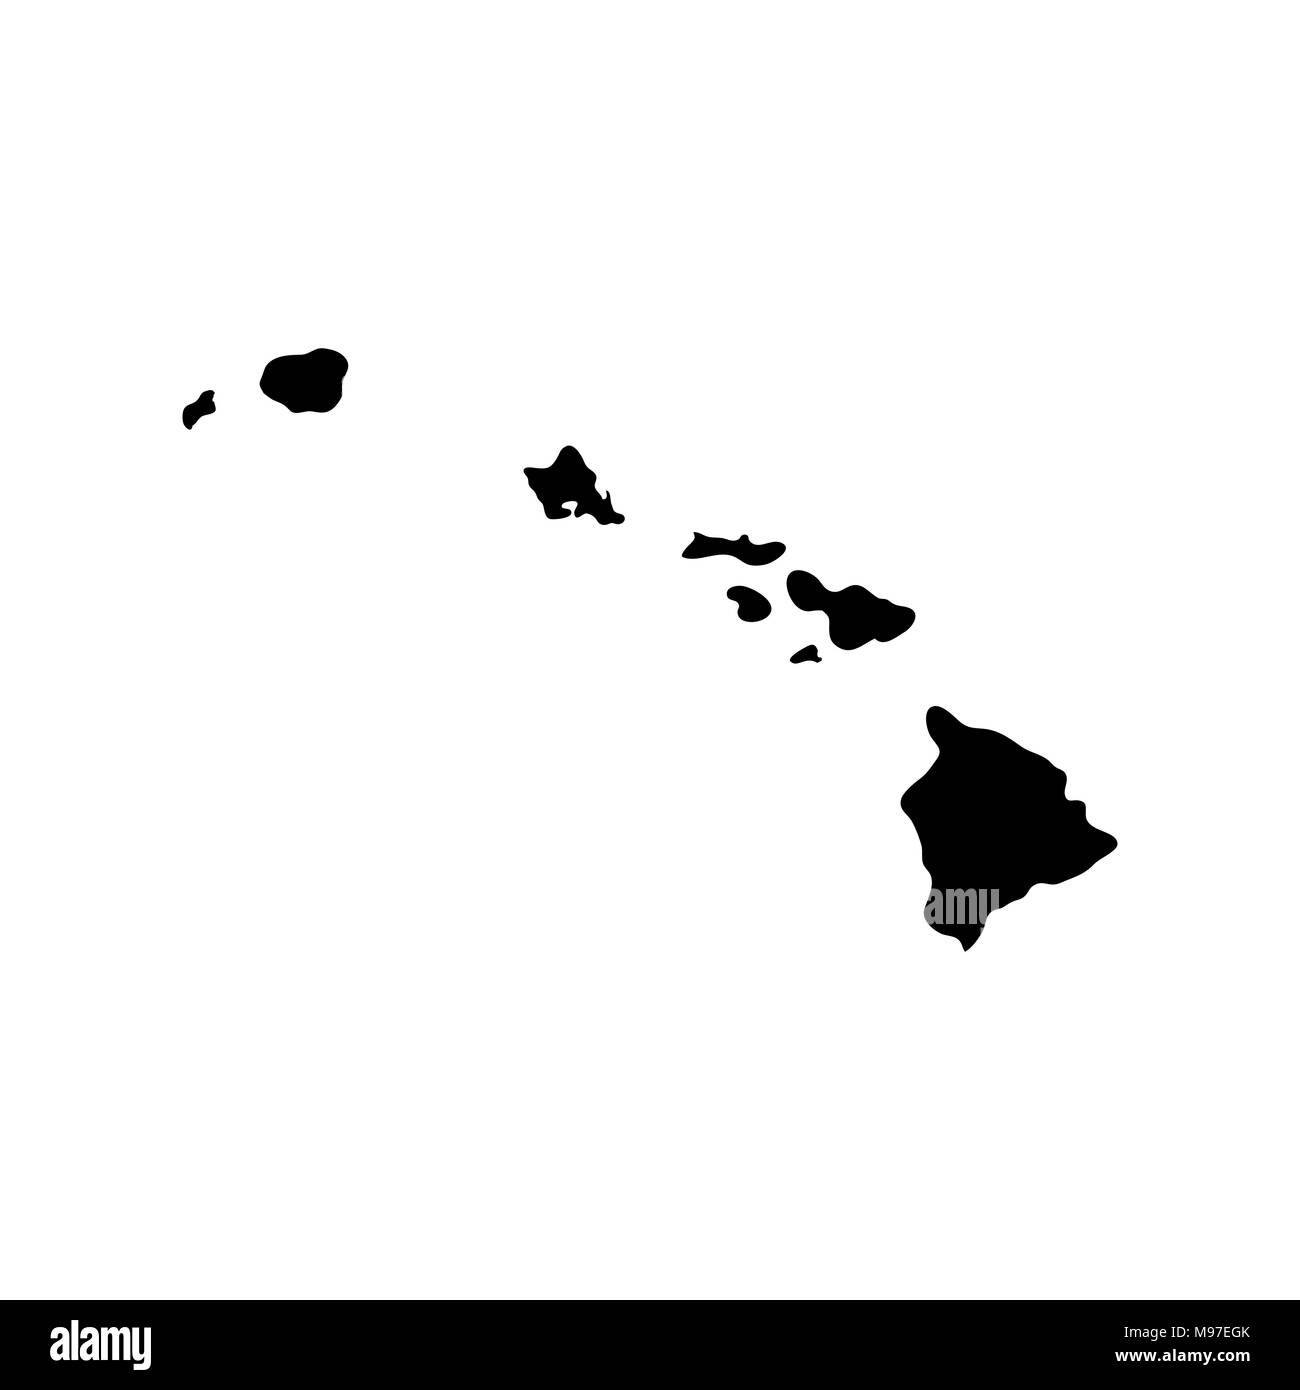 Plan de l'état américain d'Hawaï Illustration de Vecteur